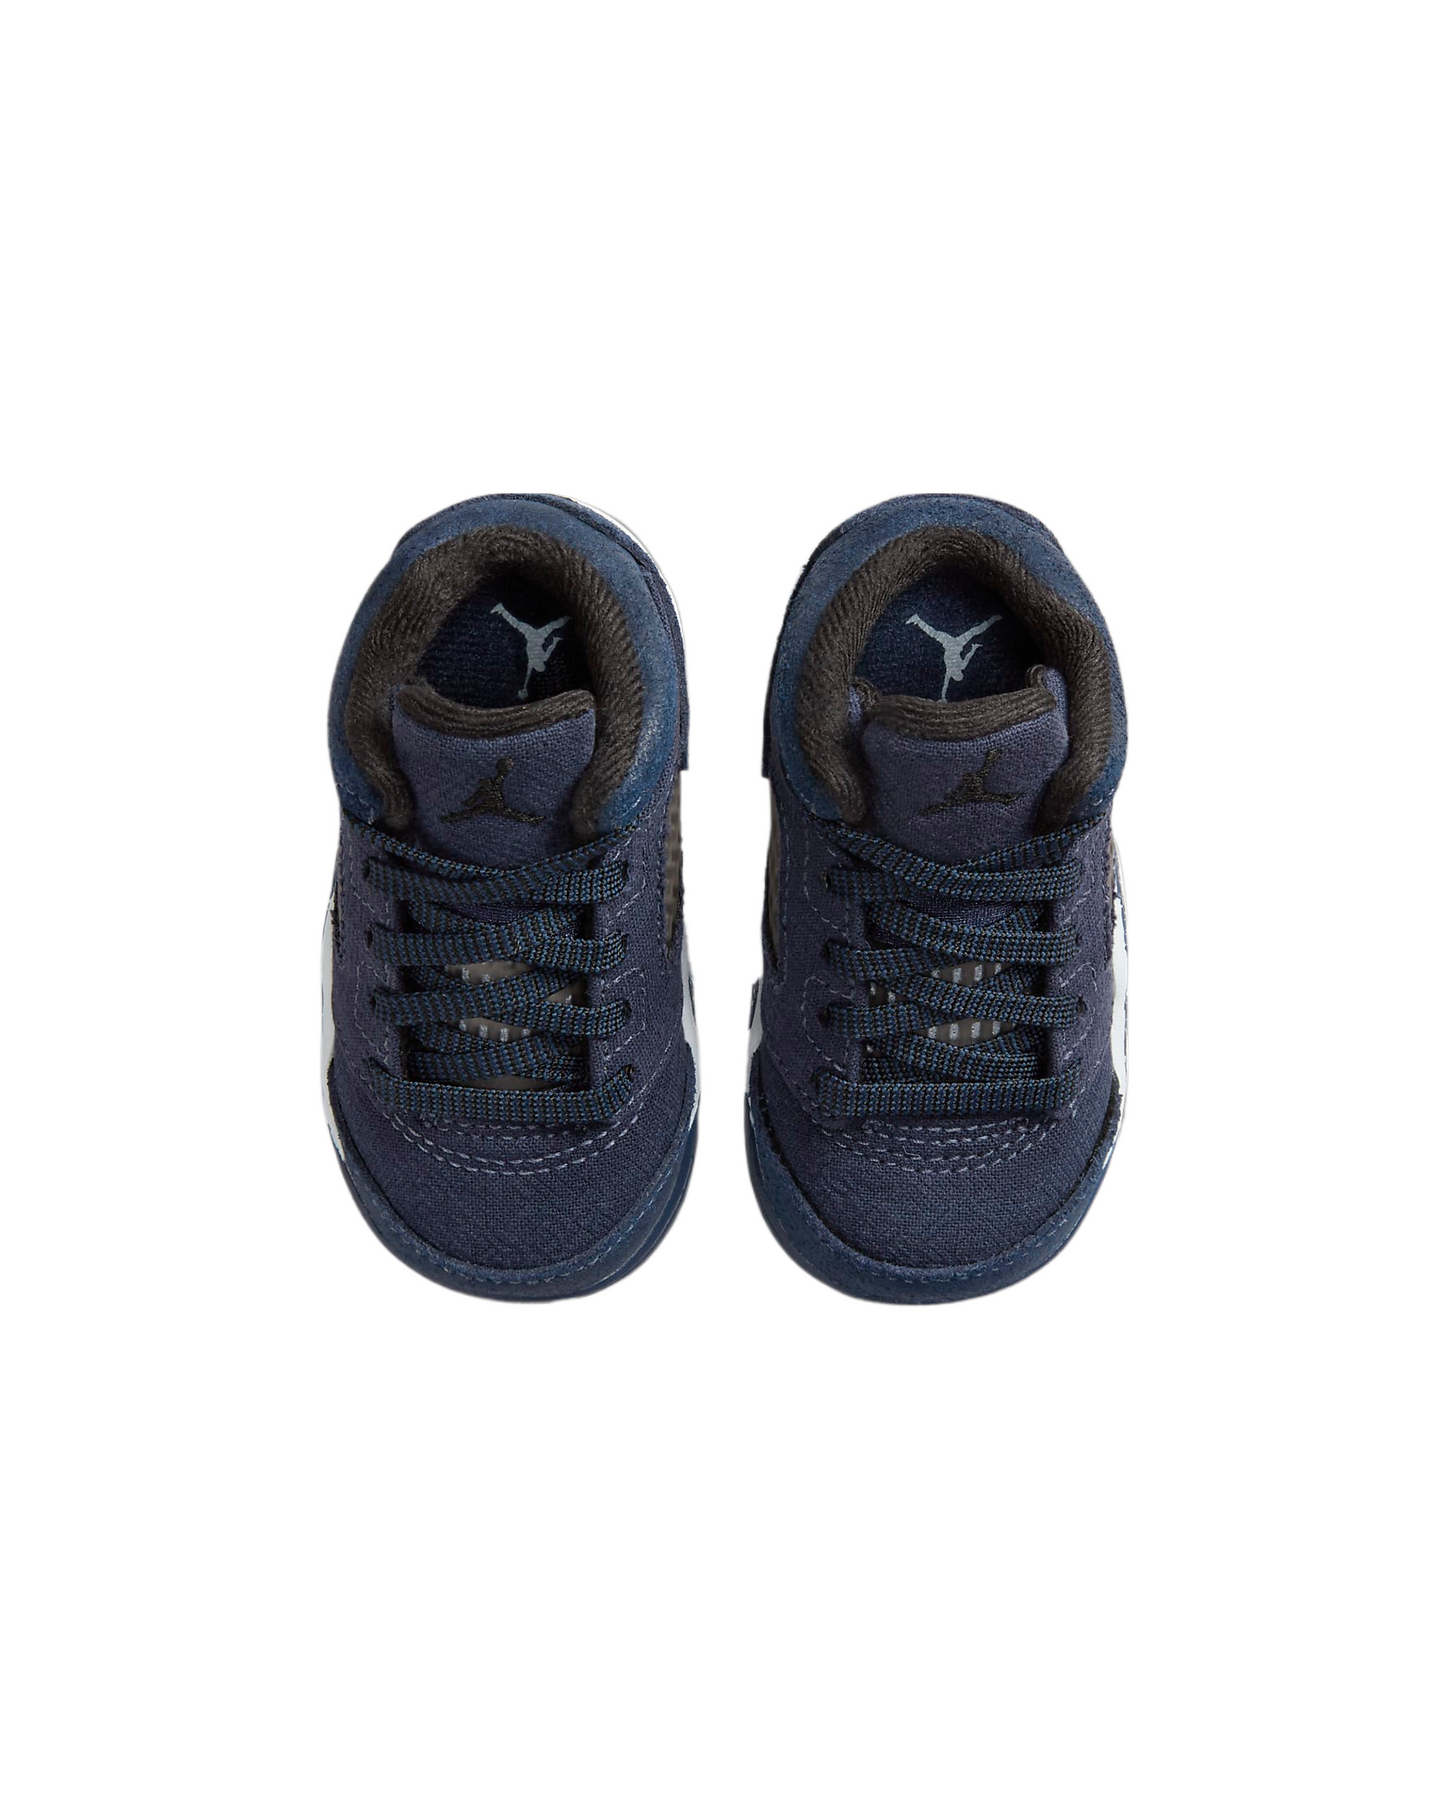 Jordan 5 Retro SE Toddler Sneaker Midnight Navy / Black